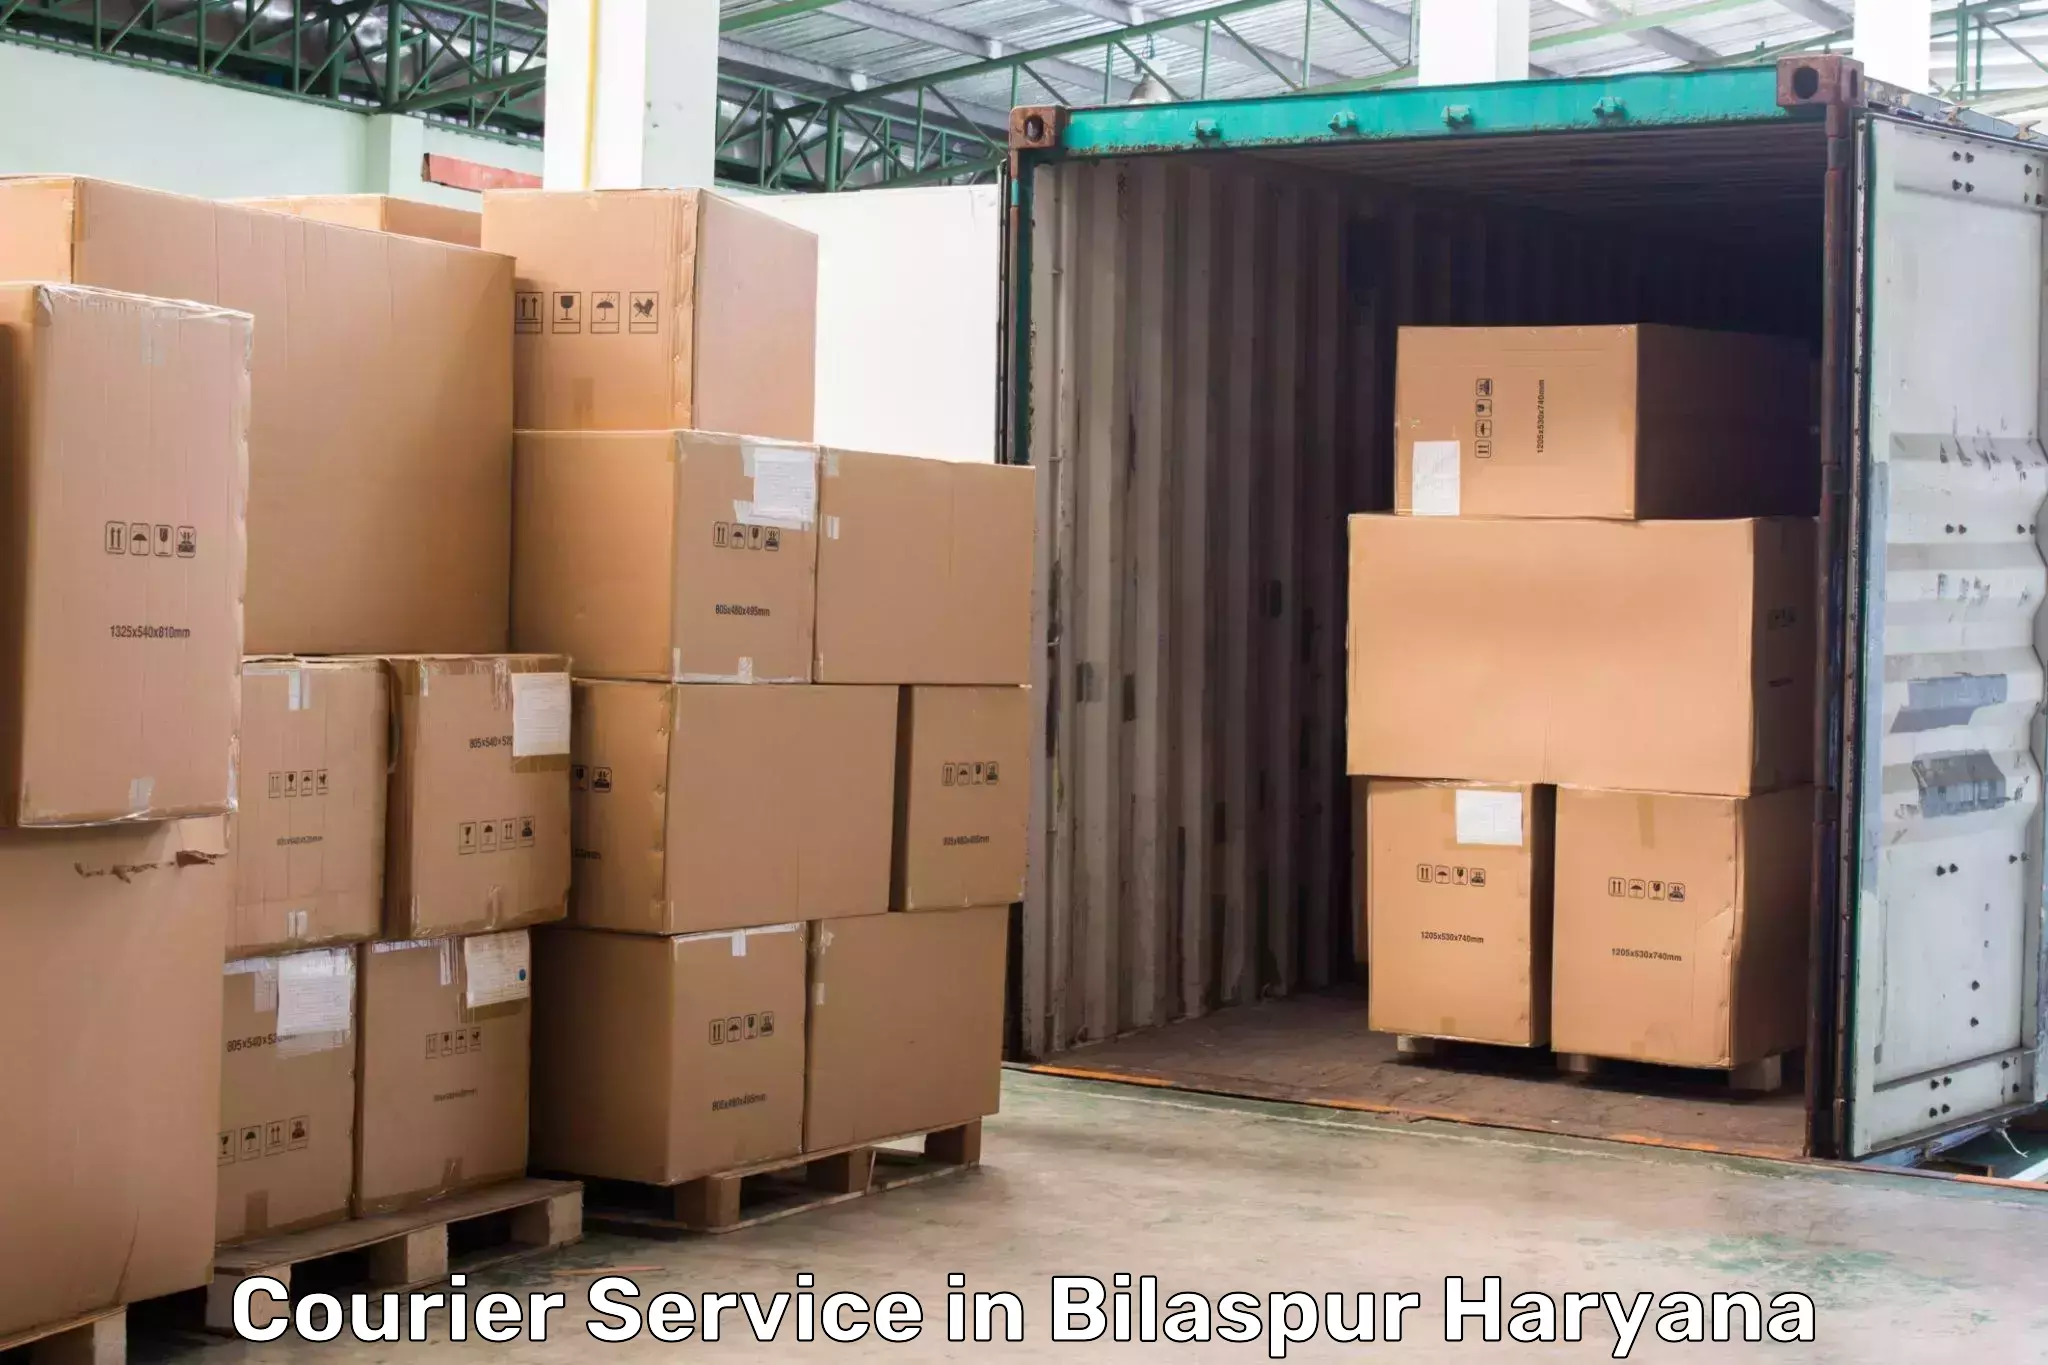 Diverse delivery methods in Bilaspur Haryana